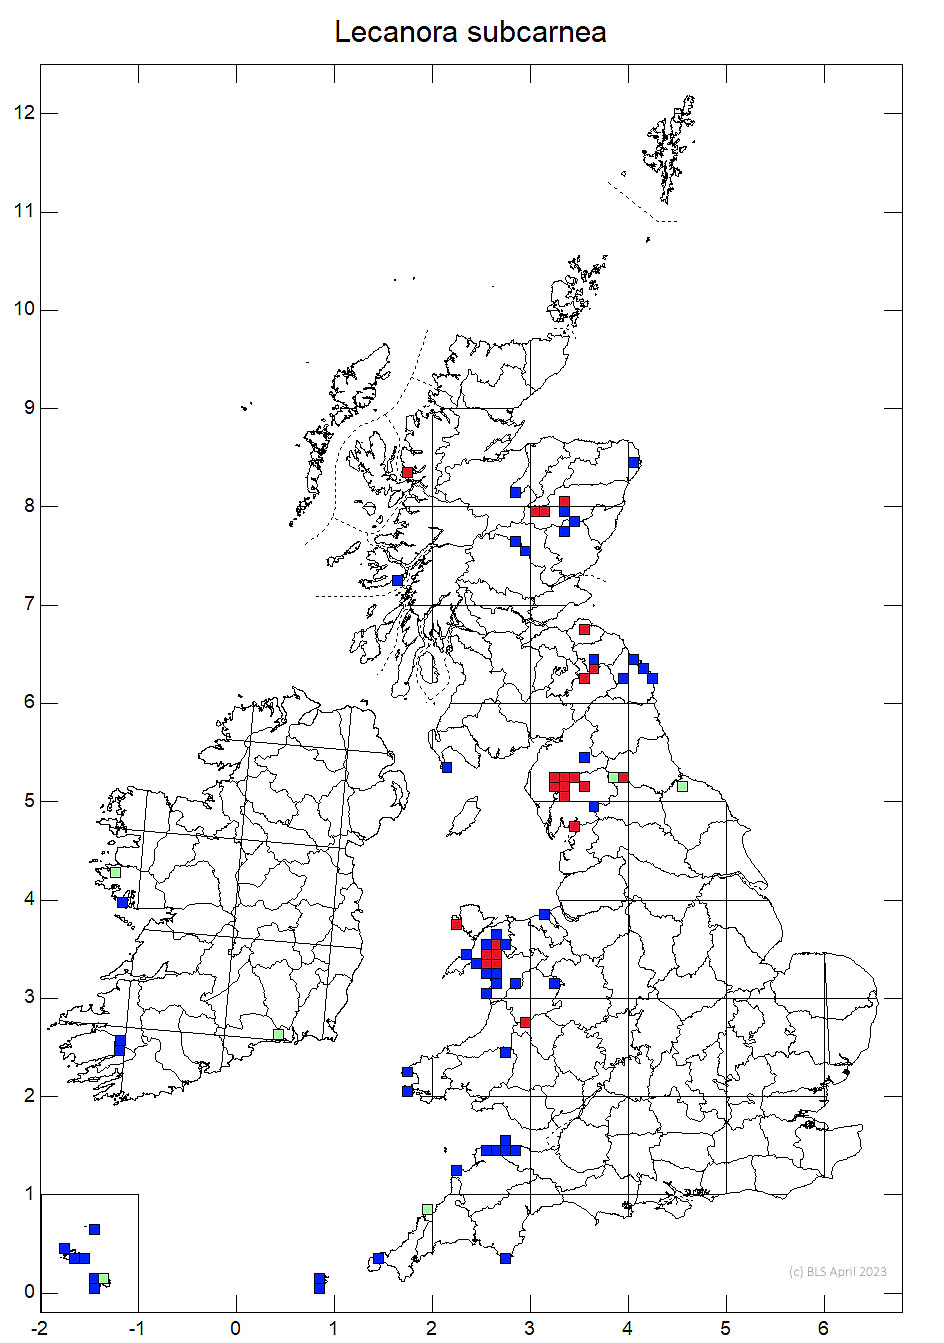 Lecanora subcarnea 10km sq distribution map